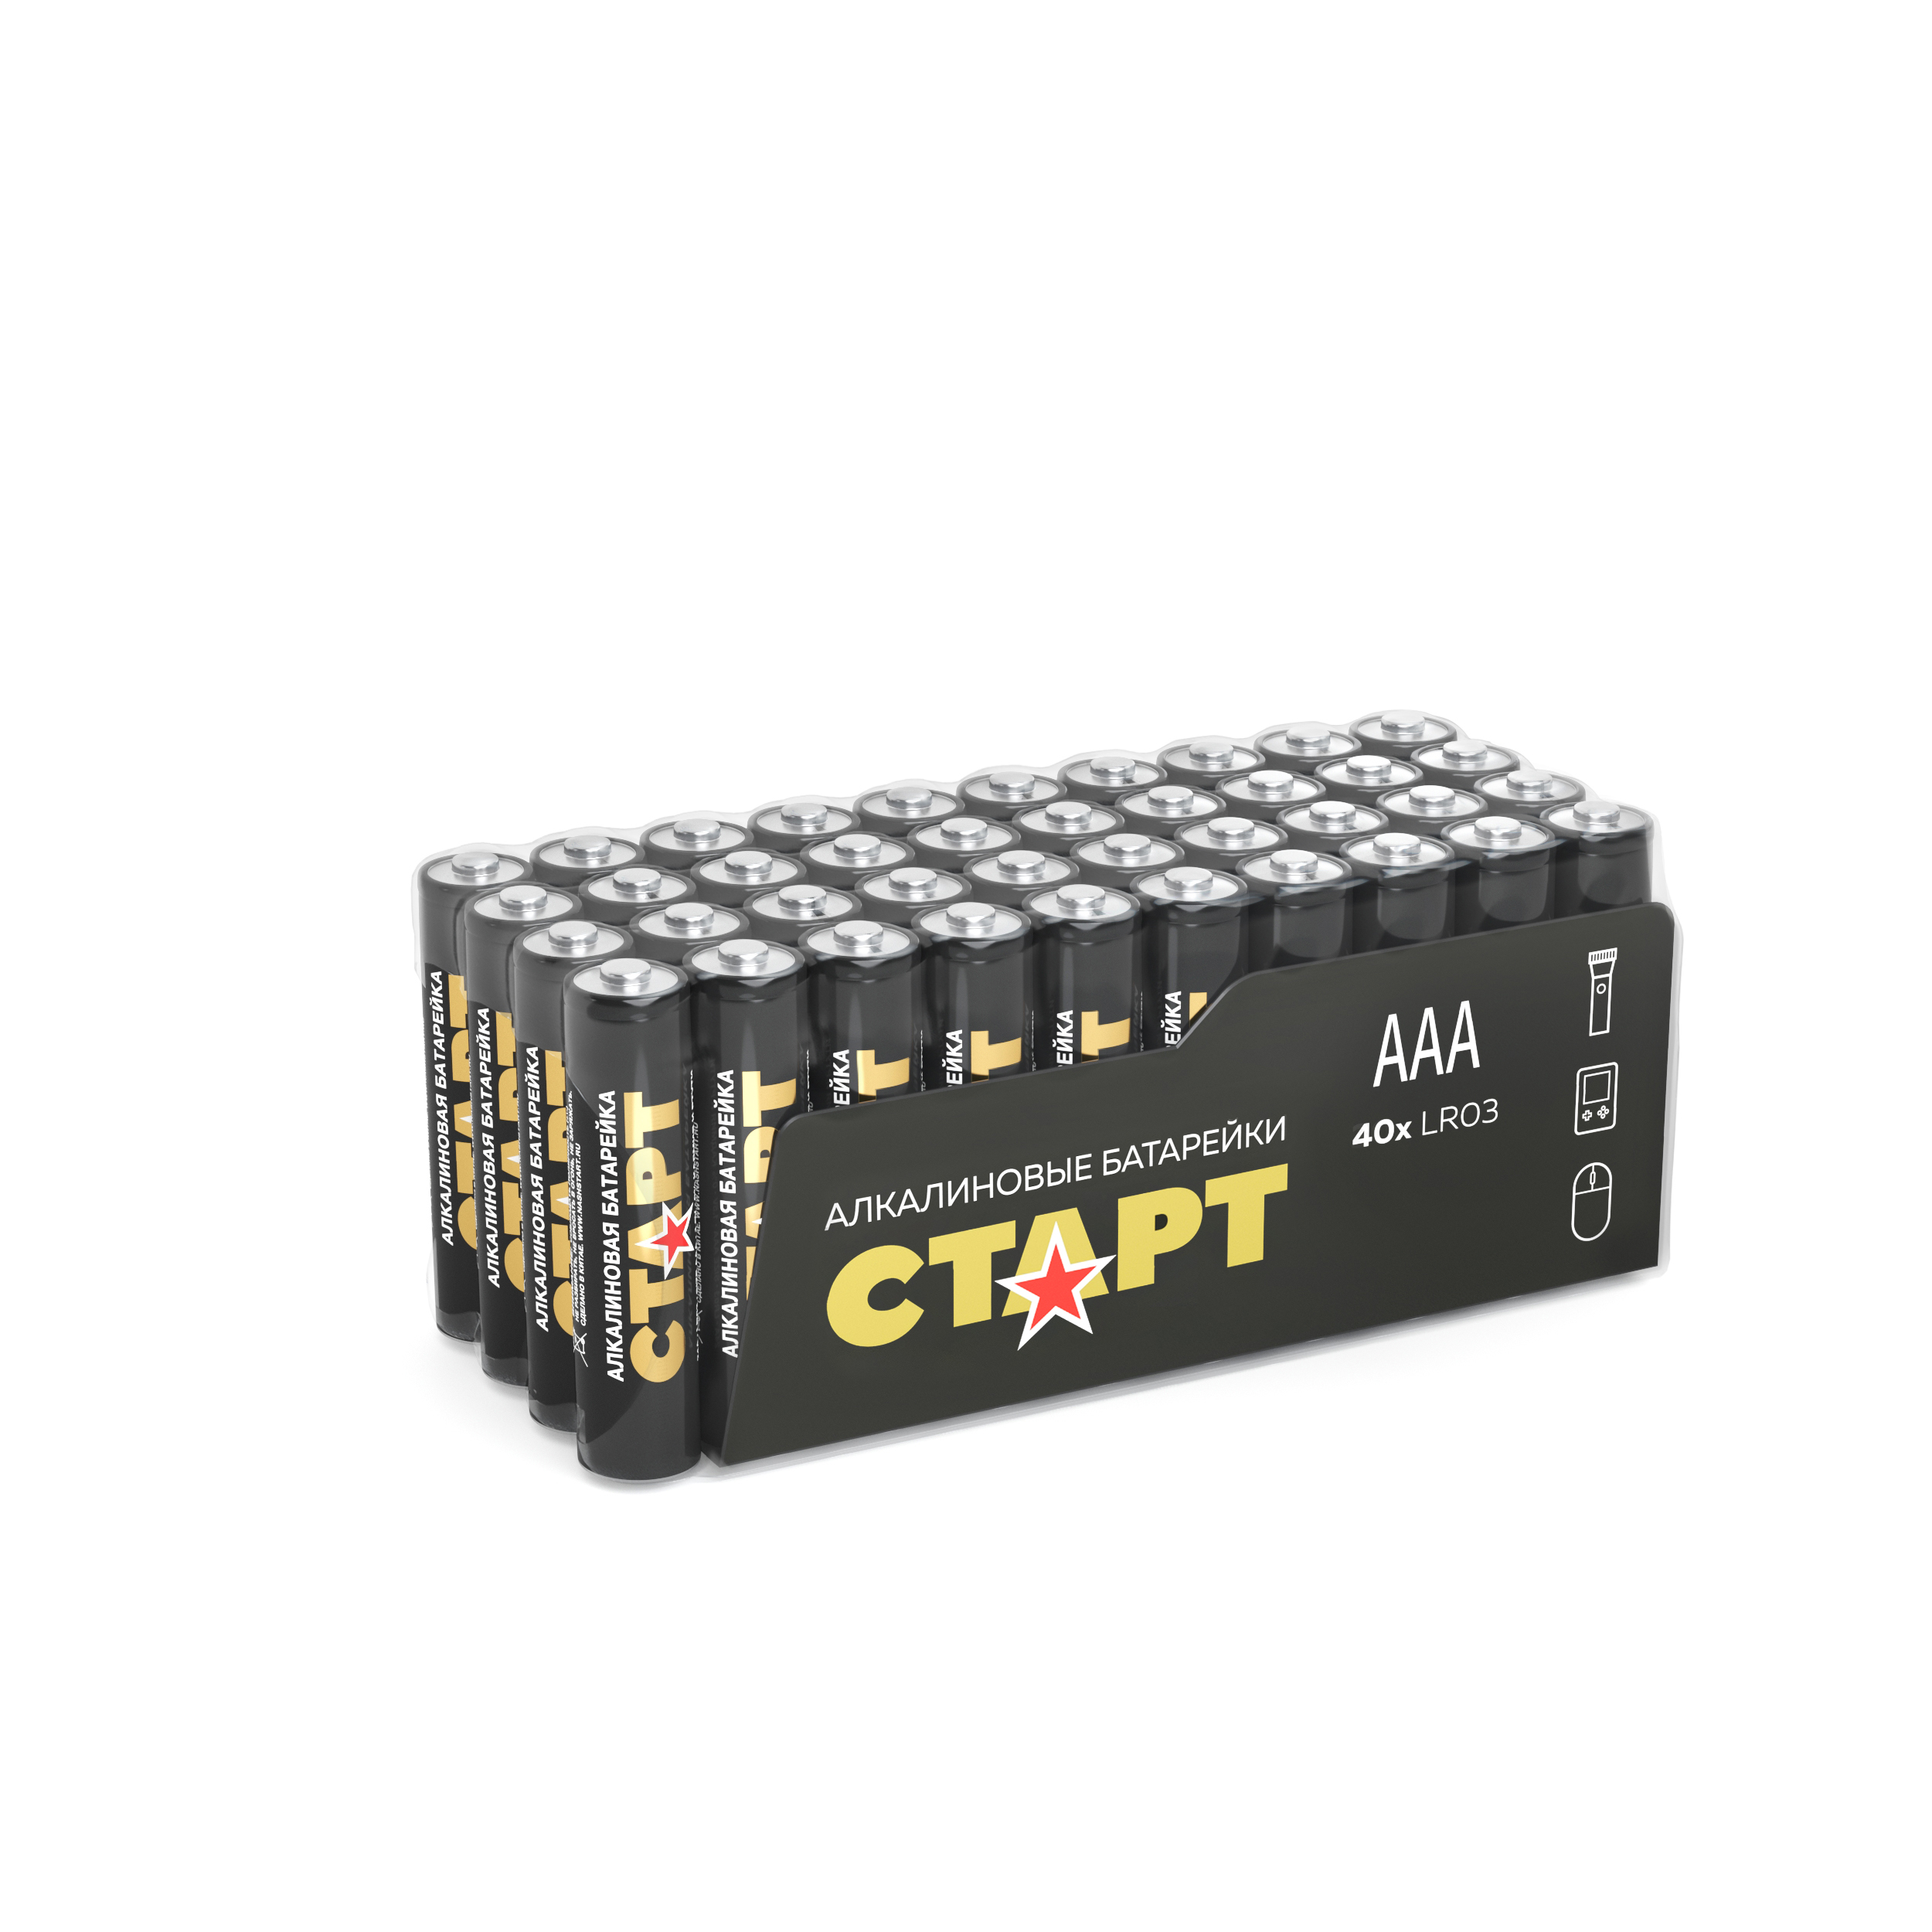 Батарейки СТАРТ ААА (LR03), 40 шт.